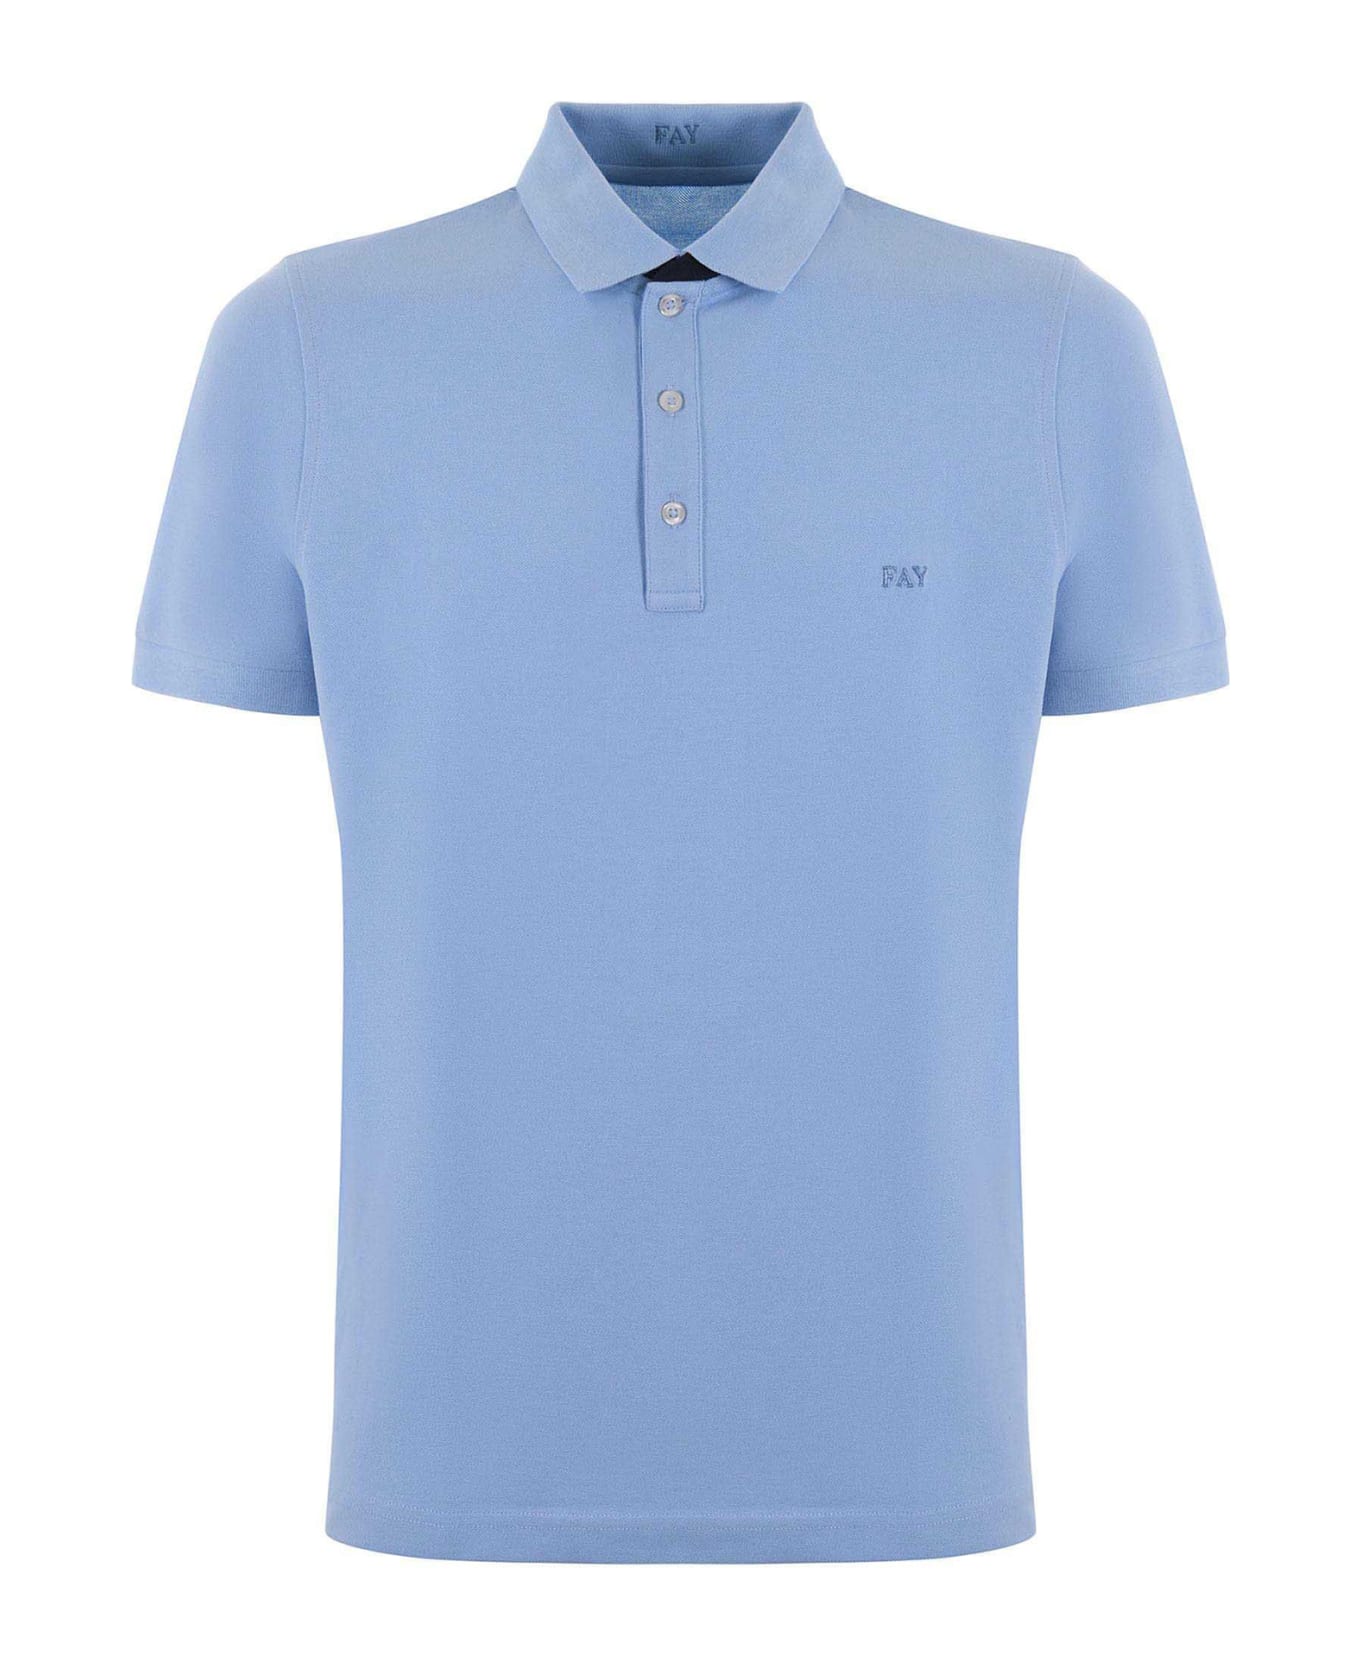 Fay Light Blue Short-sleeved Polo Shirt In Cotton - AZZURRO